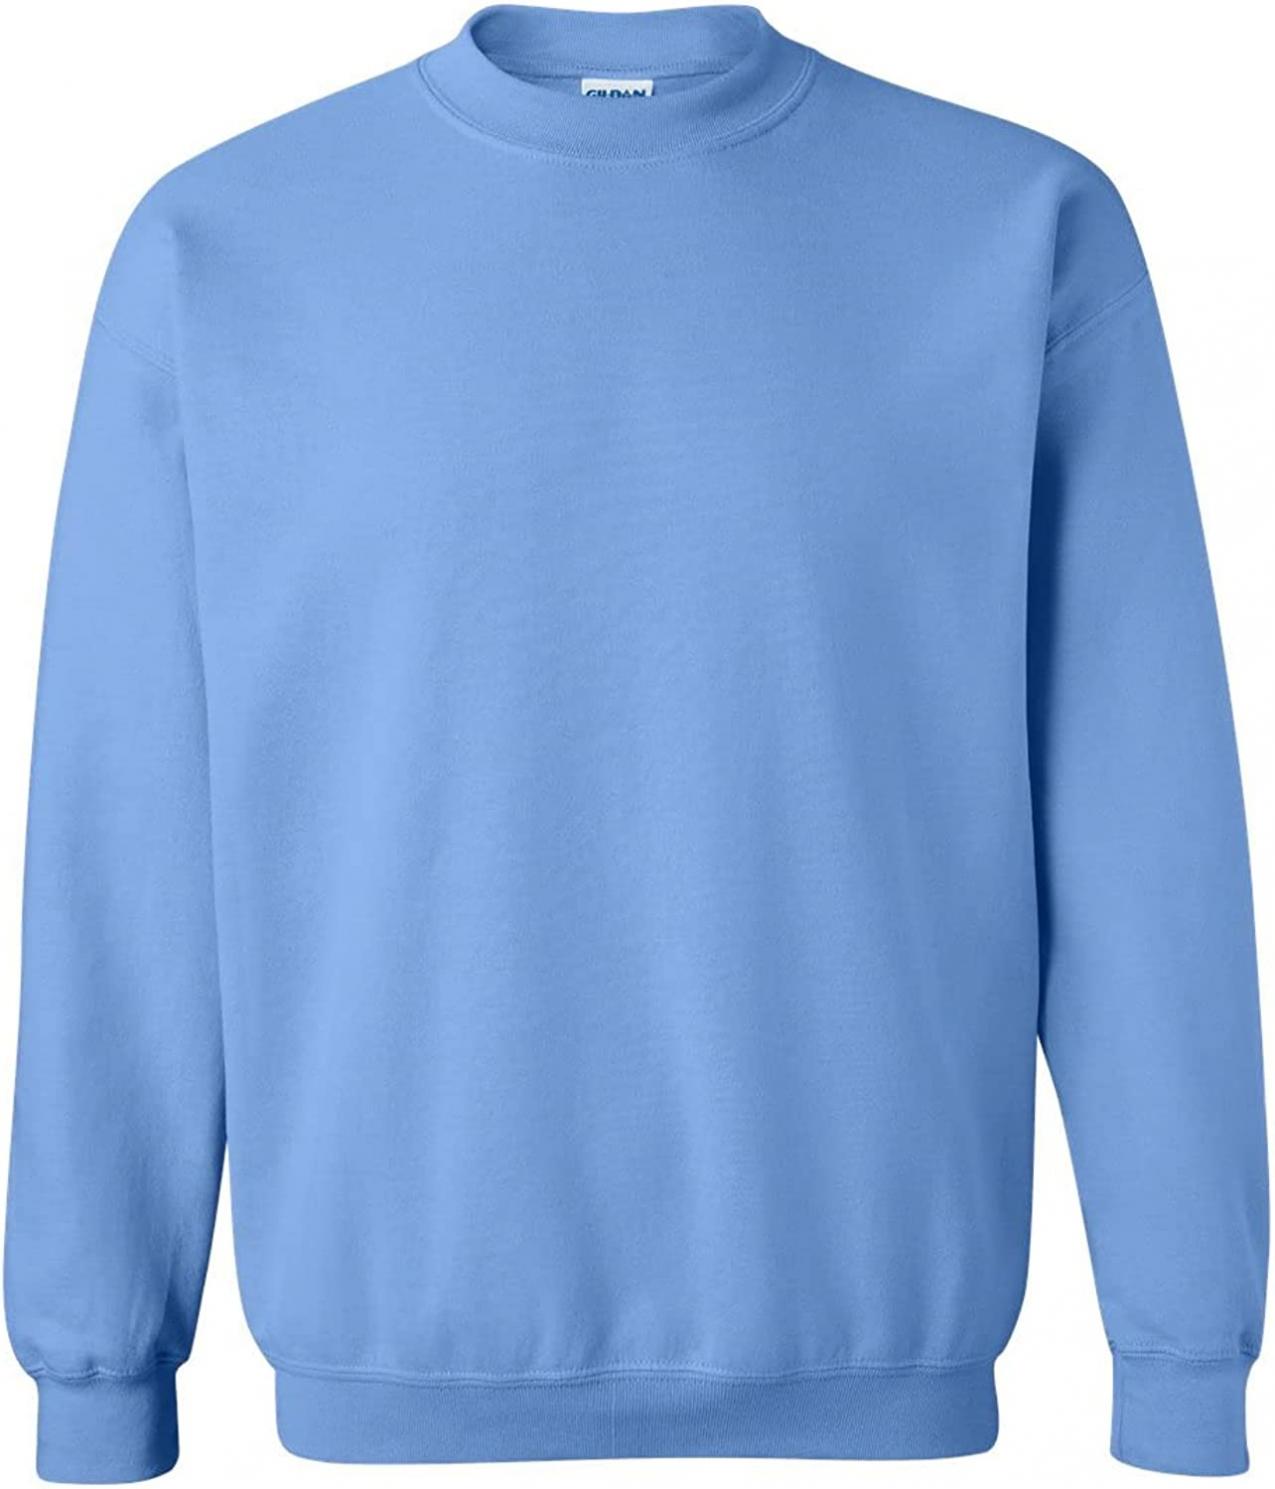 Gildan Men's Fleece Crewneck Sweatshirt, Style G18000 Carolina Blue